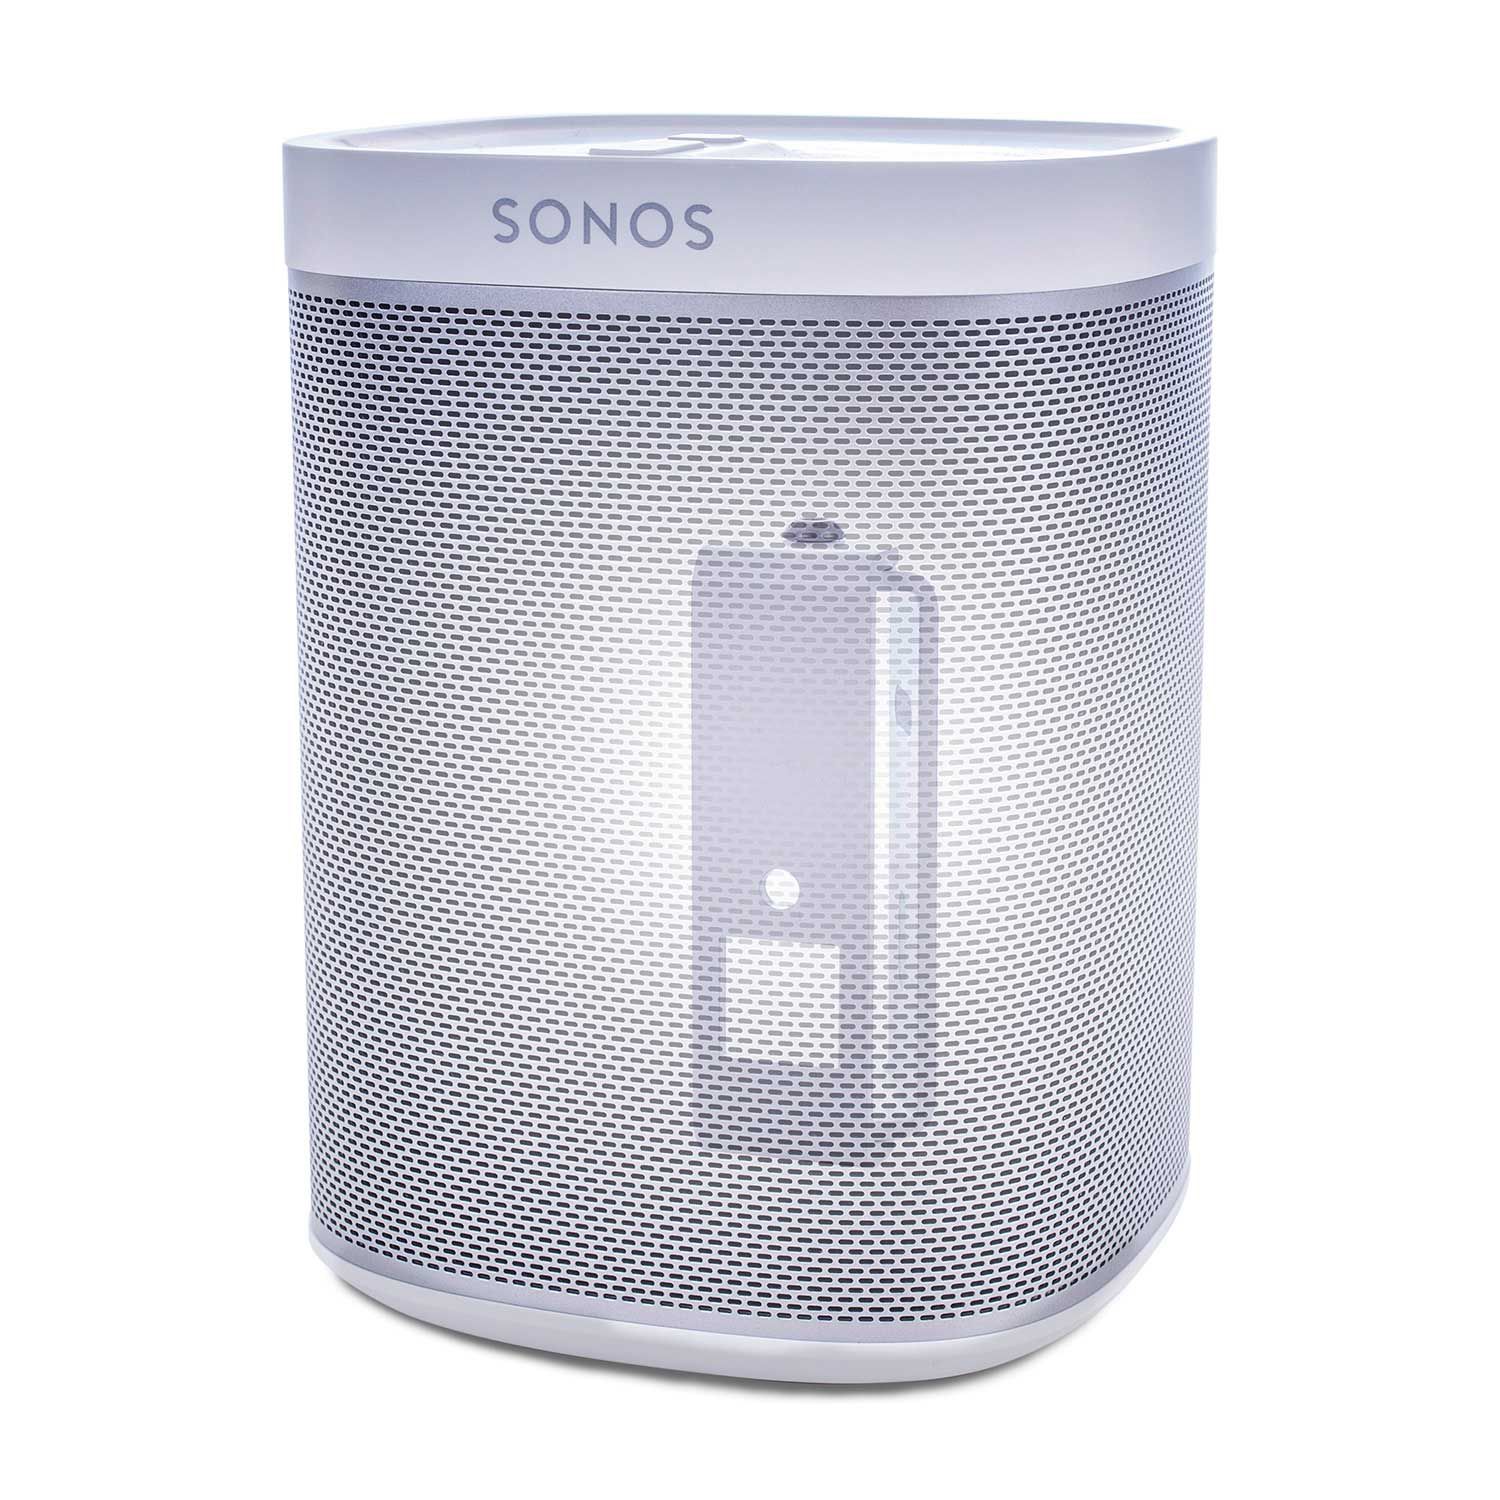 Handvest Uitleg merknaam Muurbeugel Sonos Play 1 wit van Vebos, hang je Sonos op